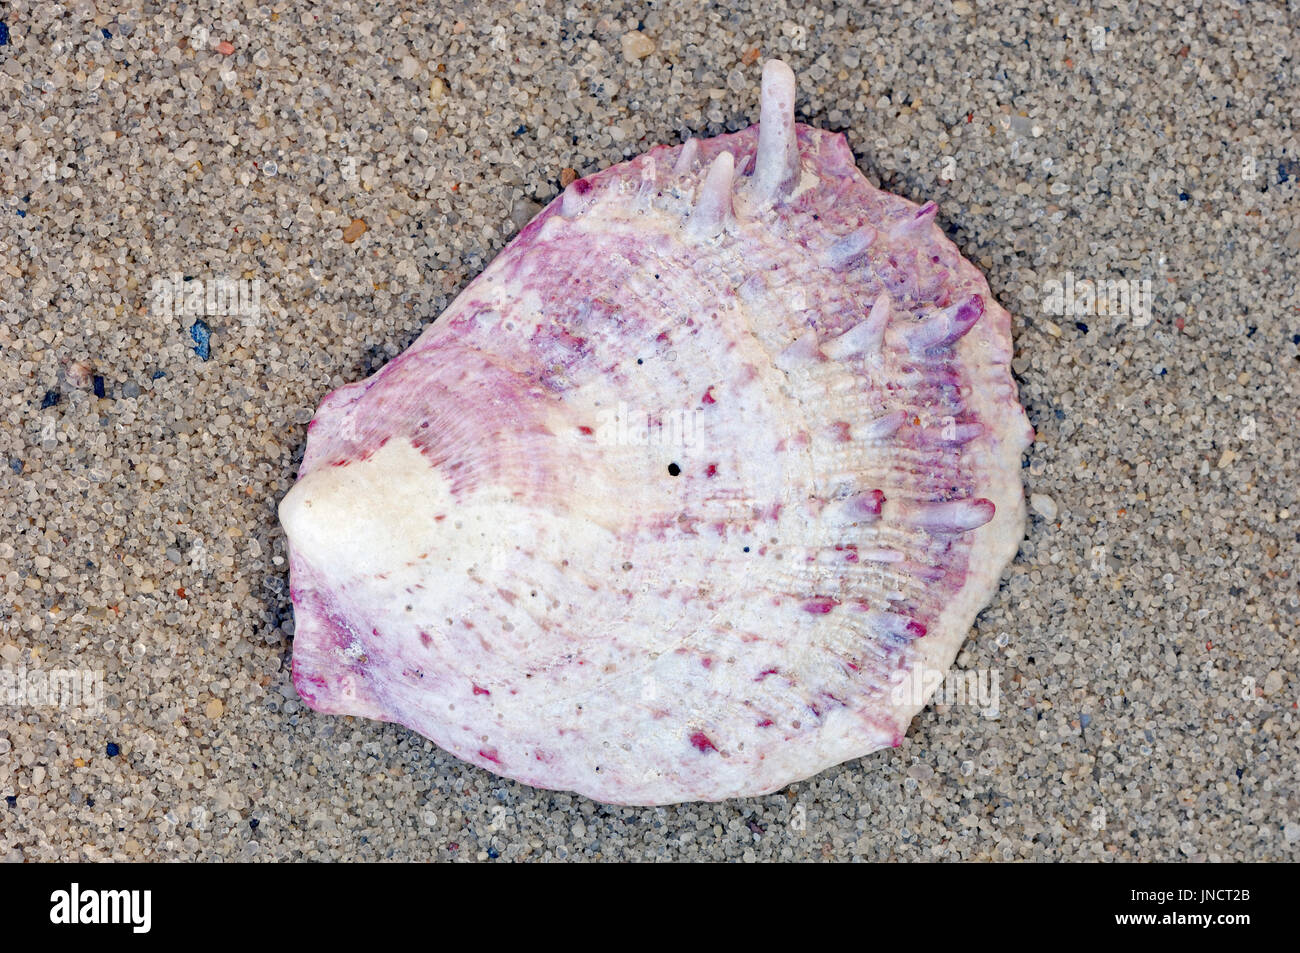 Thorny Oyster shell, France / (Spondylus spec.) | Stachelauster, Muschelschale / (Spondylus spec.) Stock Photo